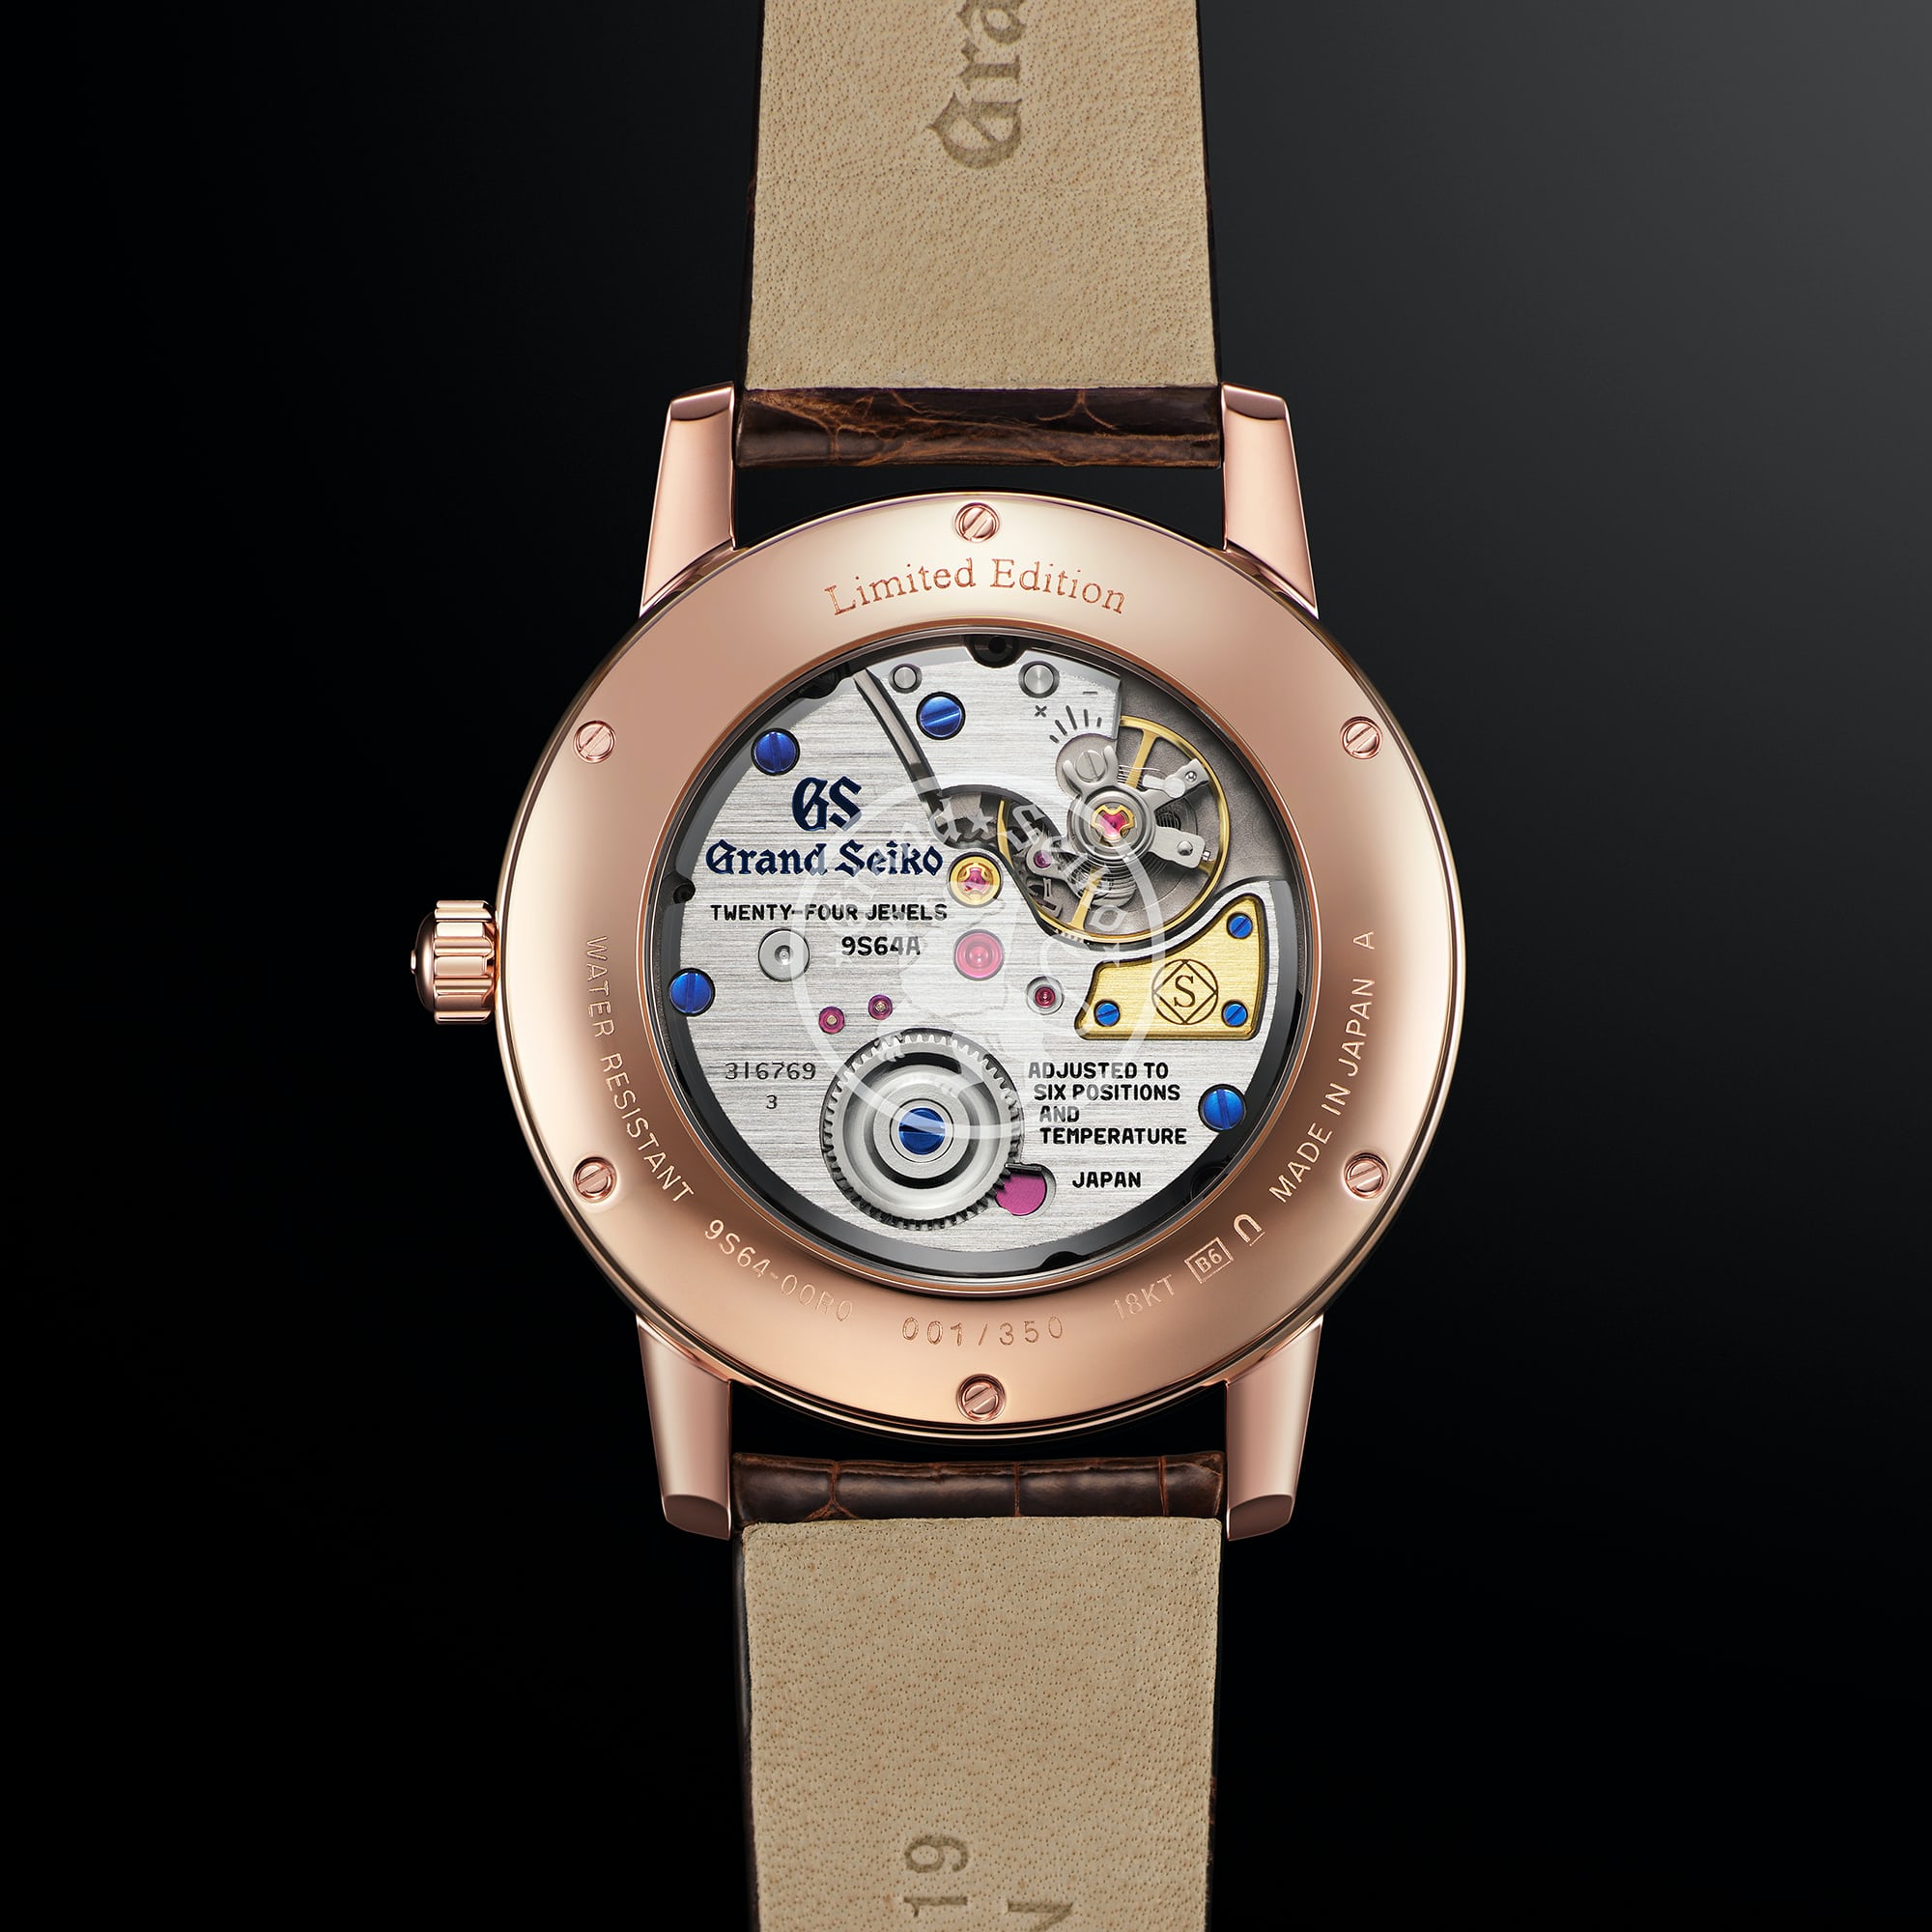 Introducing The Grand Seiko Kintaro Hattori 160th Anniversary And Seiko  140th Anniversary Limited Edition Watches